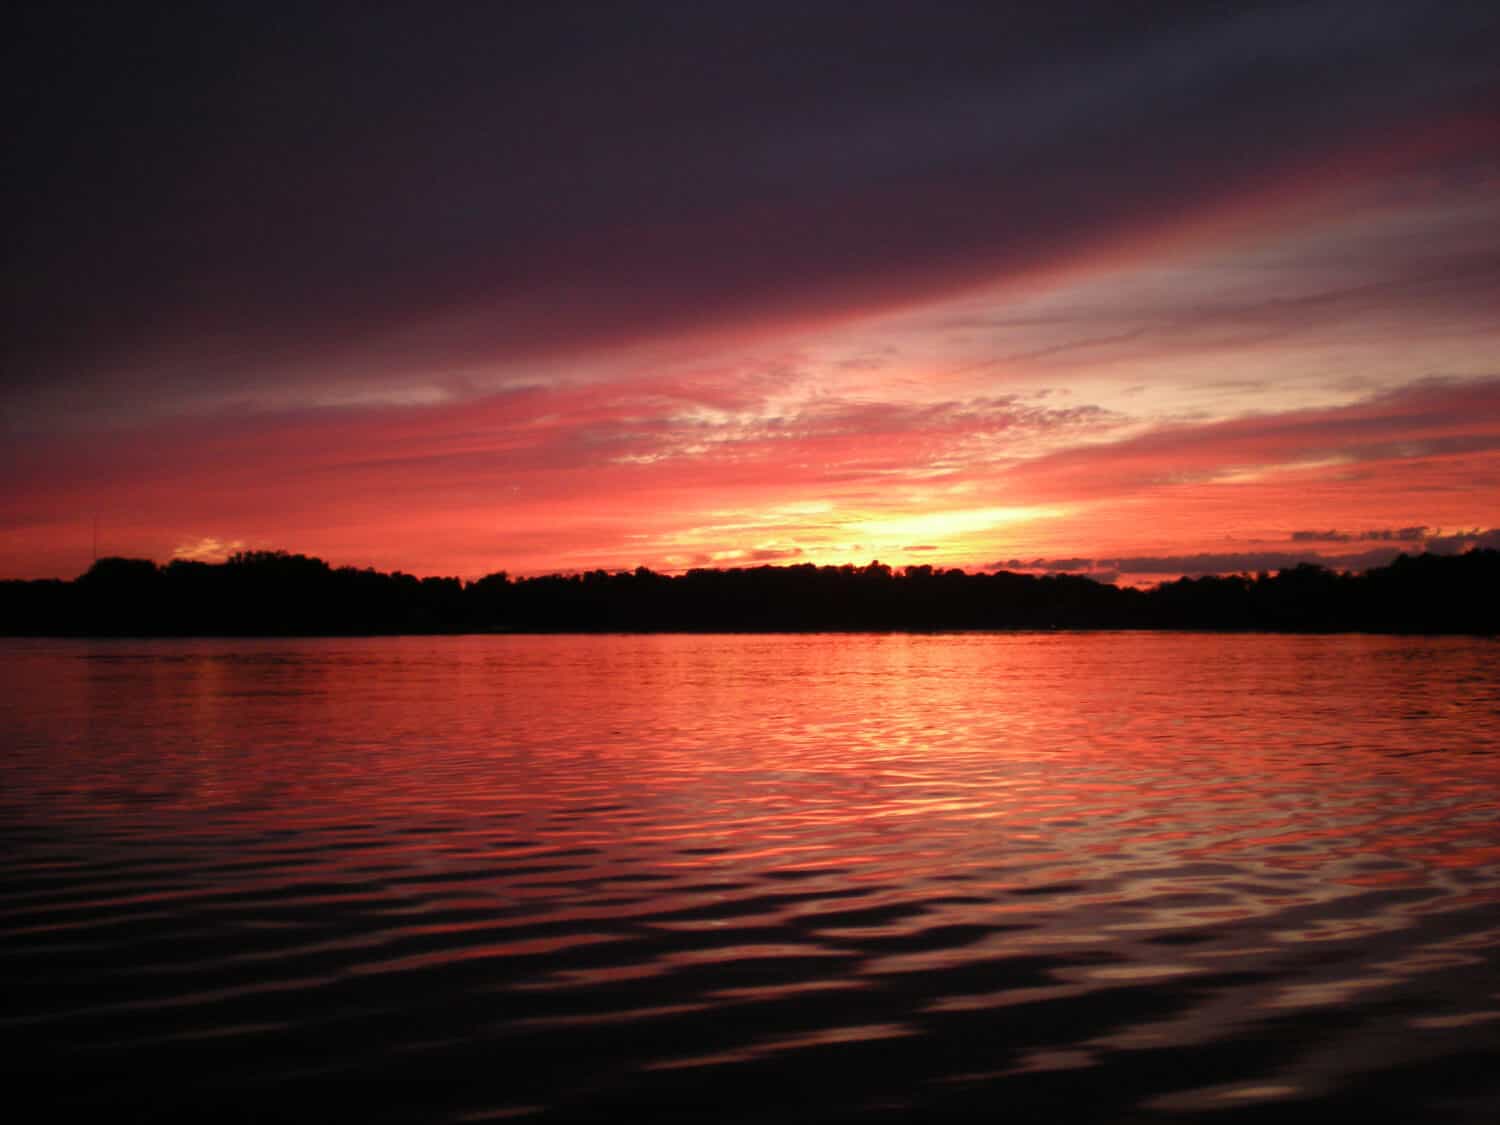                   Sun set on prior lake in Minnesota             